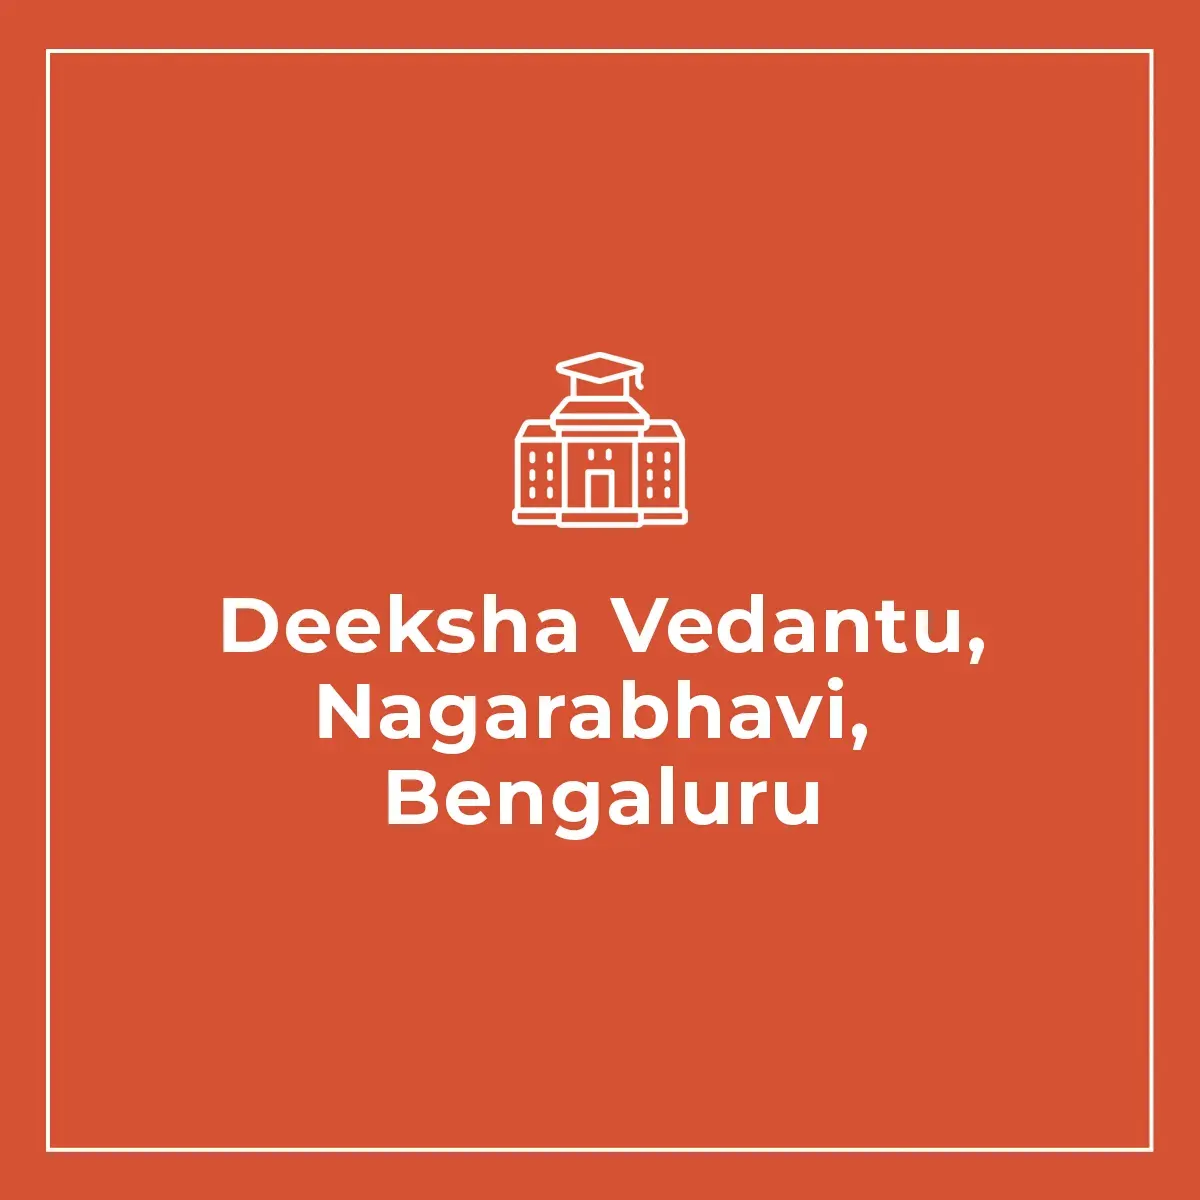 Deeksha Vedantu, Nagarabhavi, Bengaluru